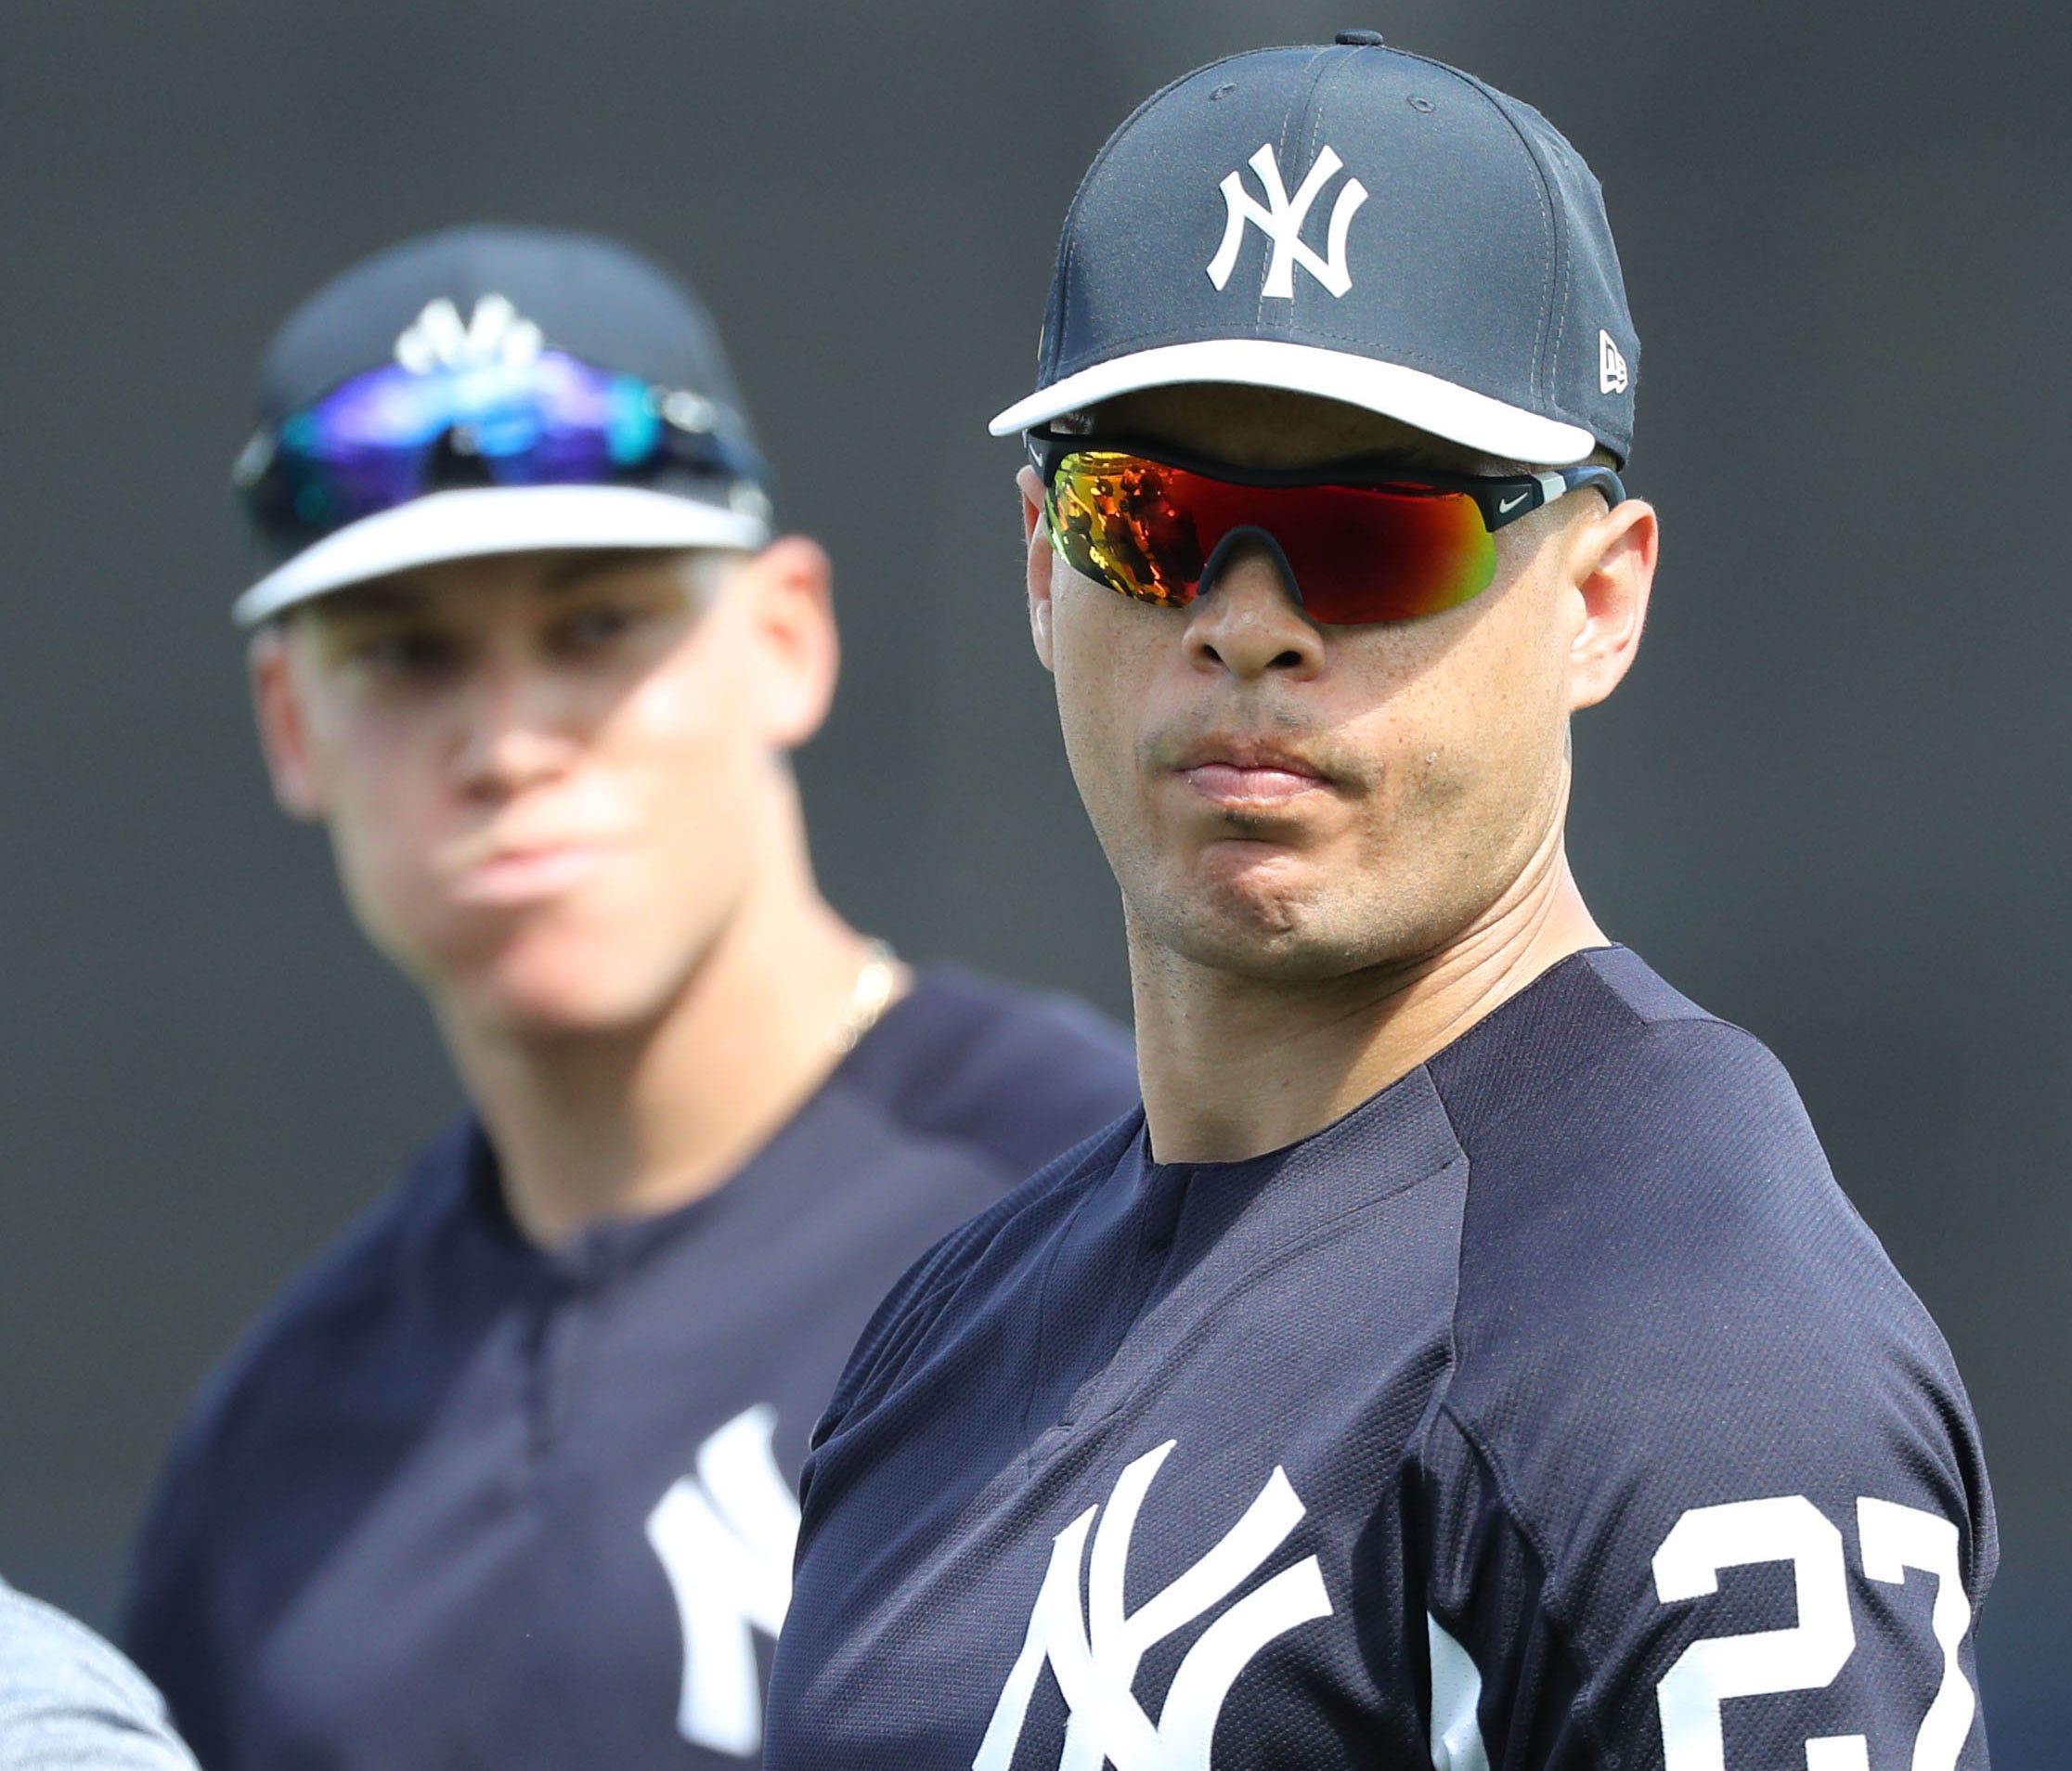 Yankees sluggers Giancarlo Stanton and Aaron Judge prepare for the 2018 season.